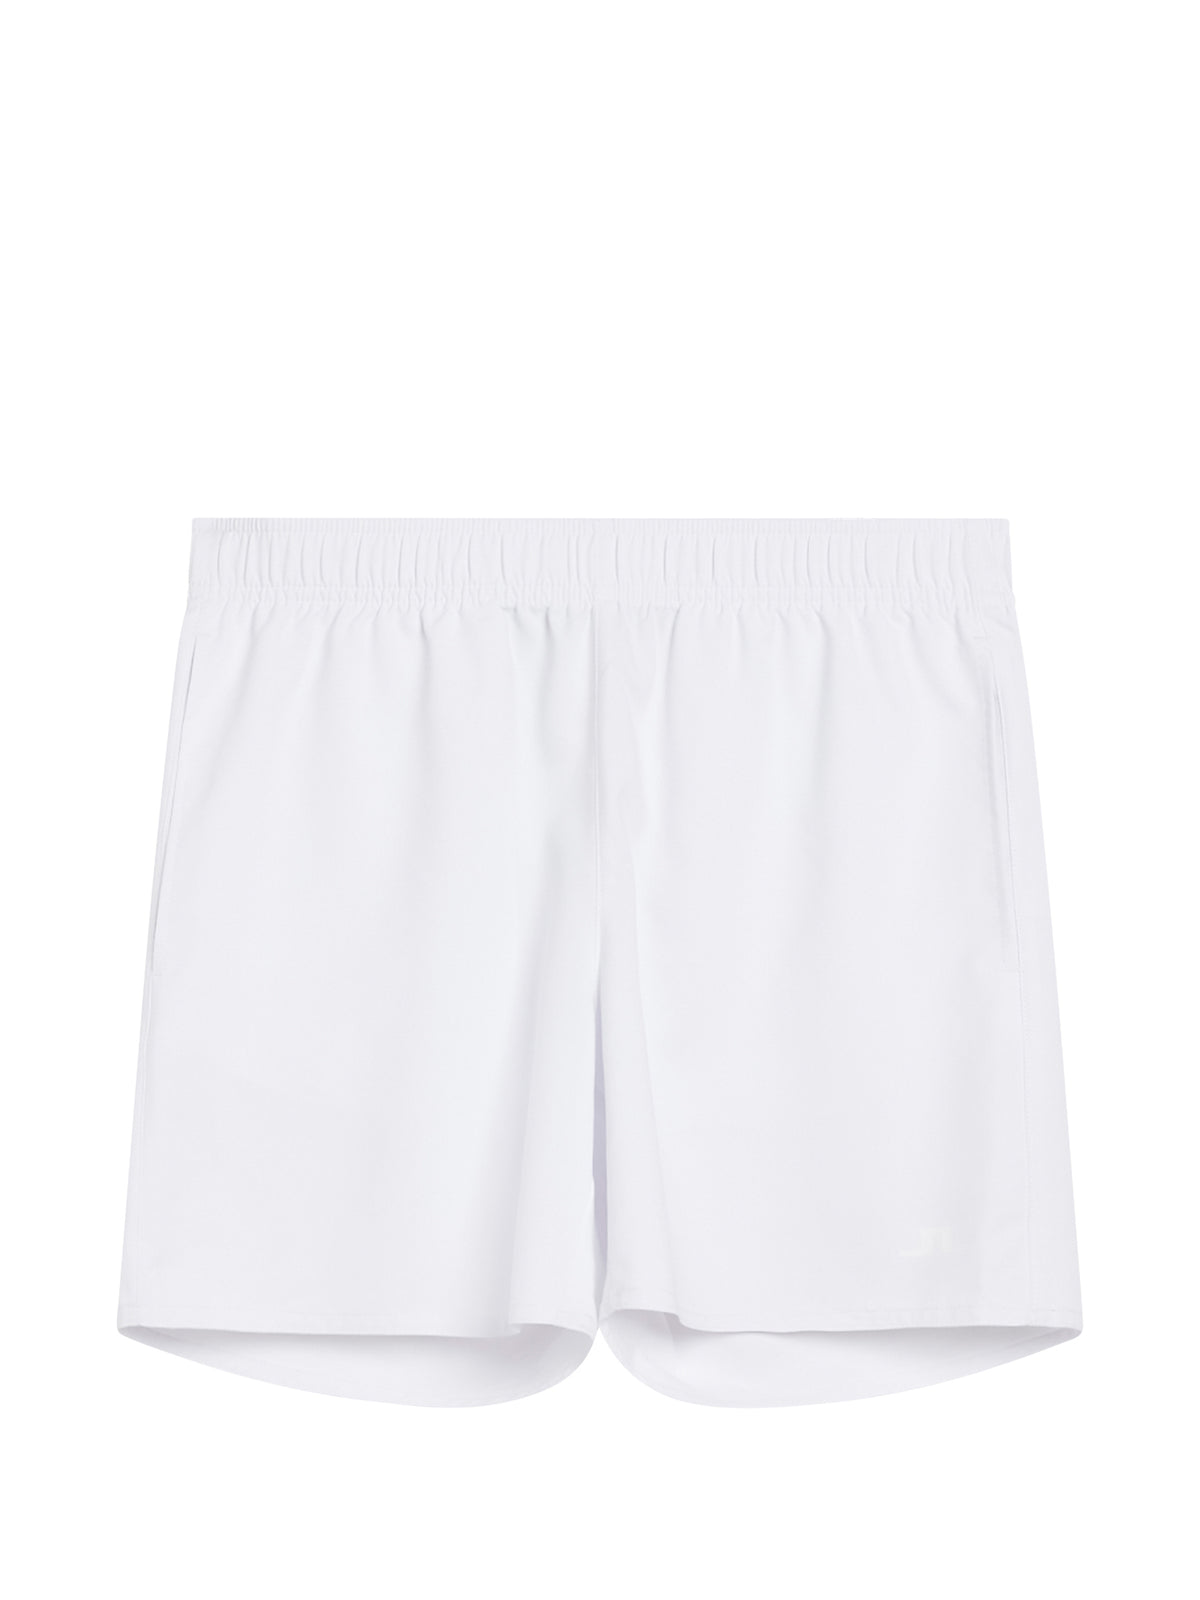 White short shorts